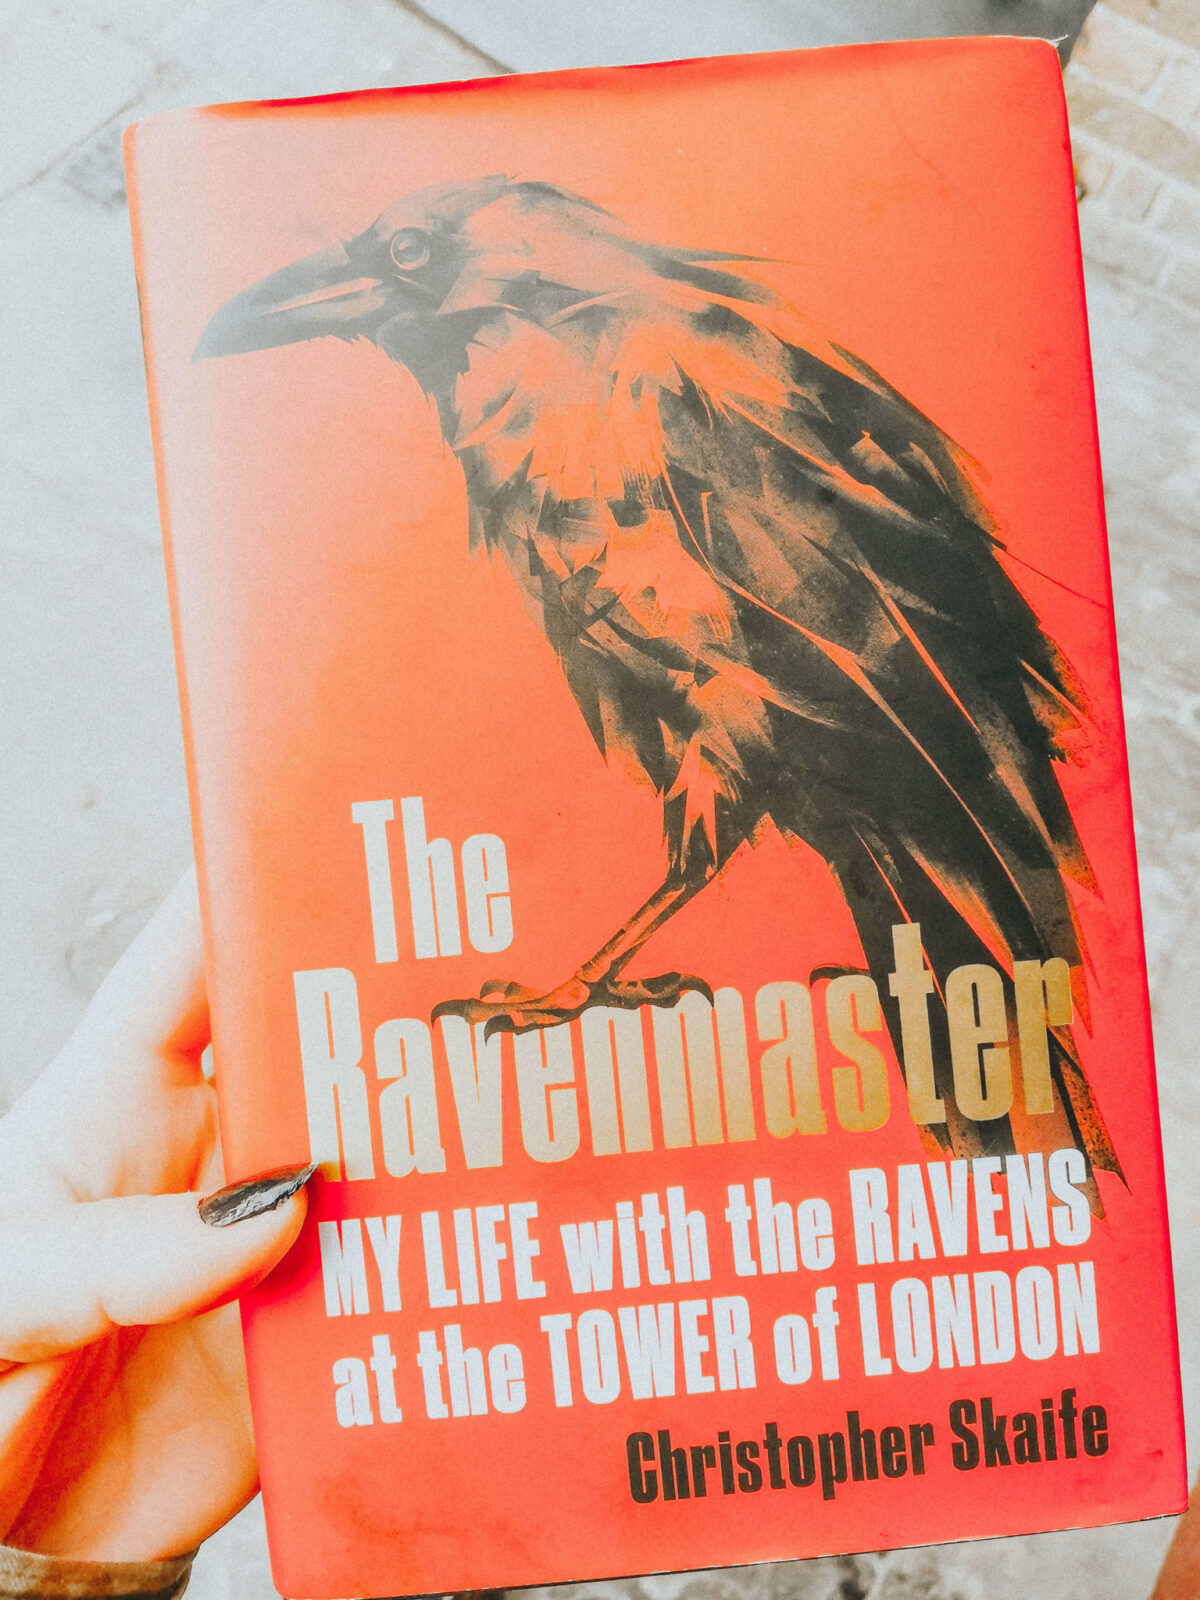 The Ravenmaster by Christopher Skaife.